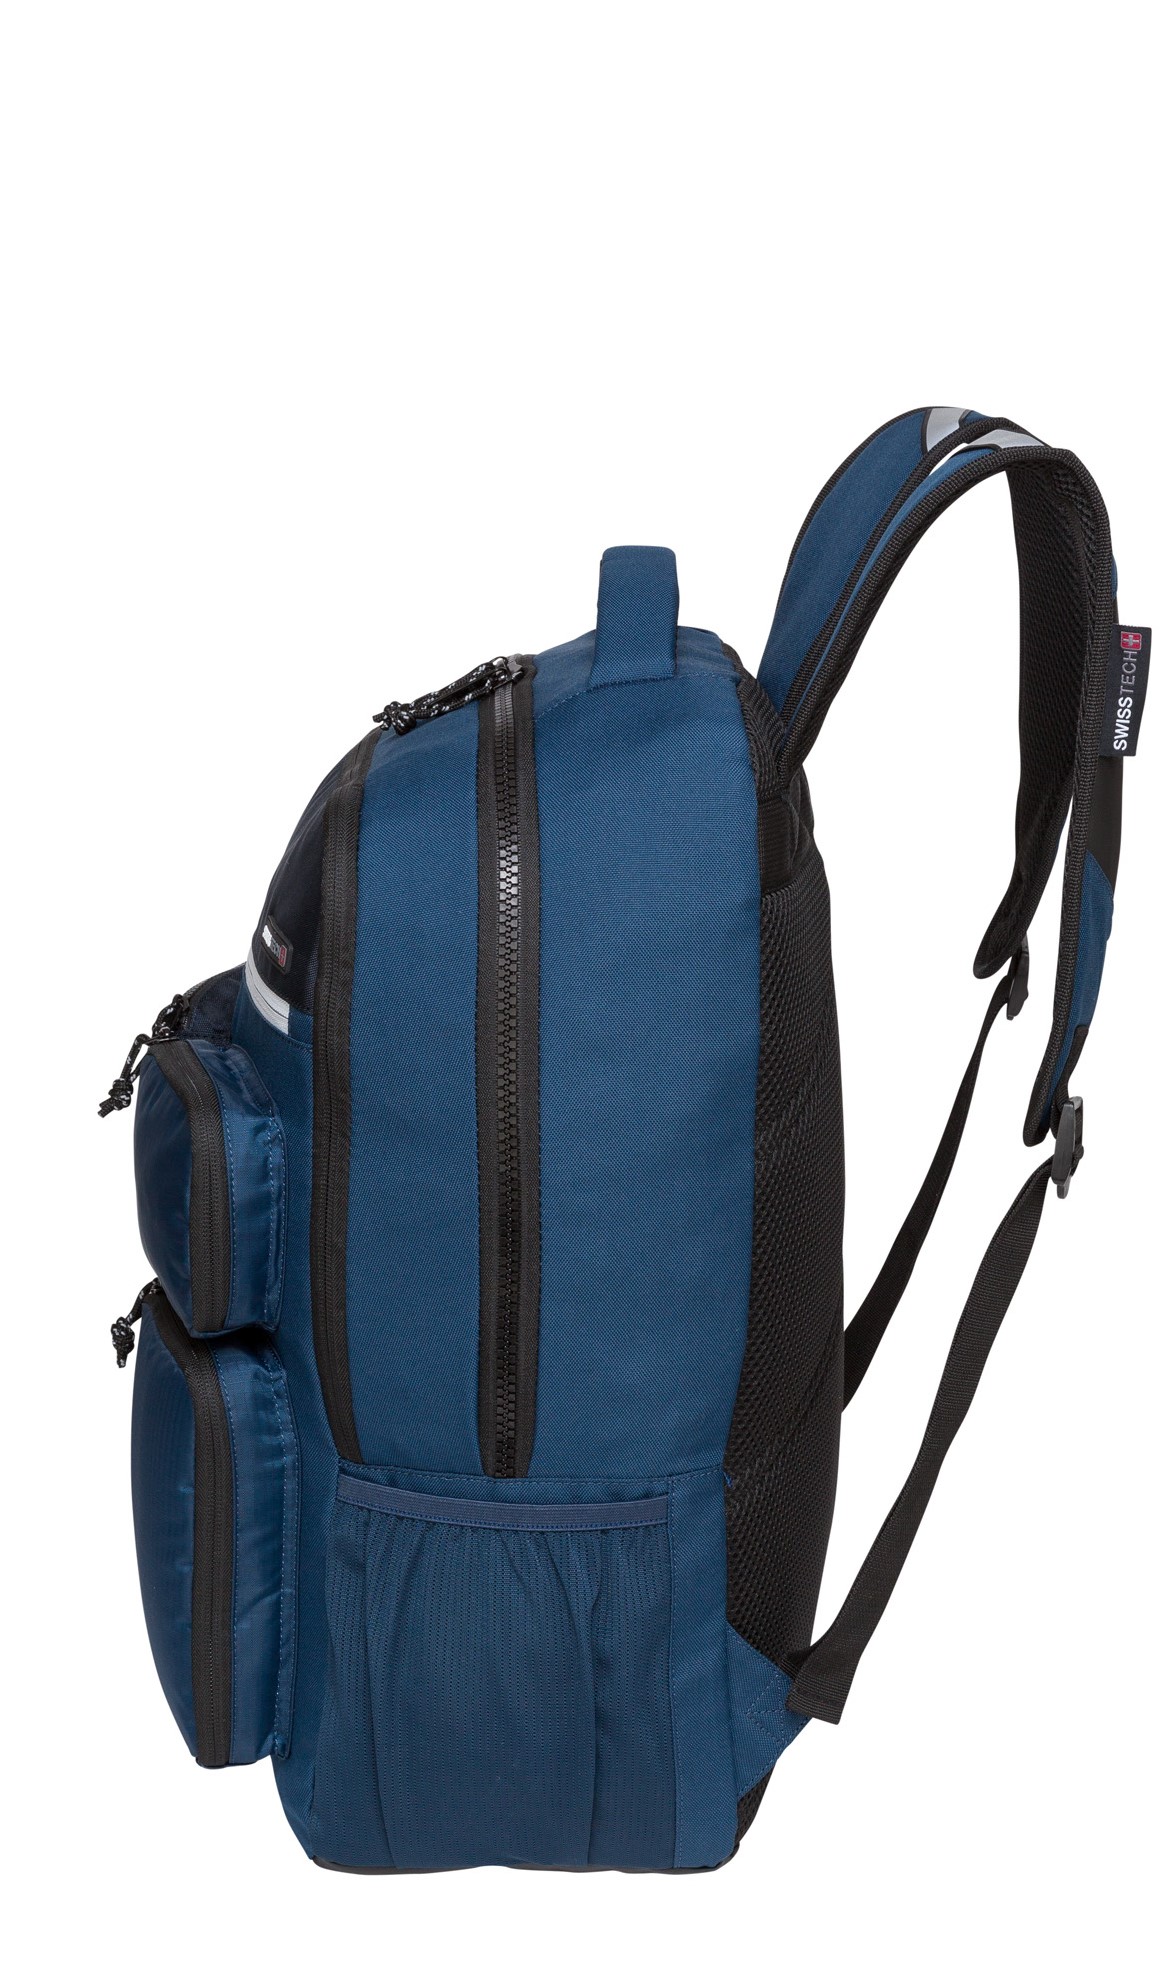 SwissTech Lucerne 34.4 L School Backpack Laptop Tablet Sleeve, Blue, Unisex, Adult, Teen, Polyester - image 3 of 9